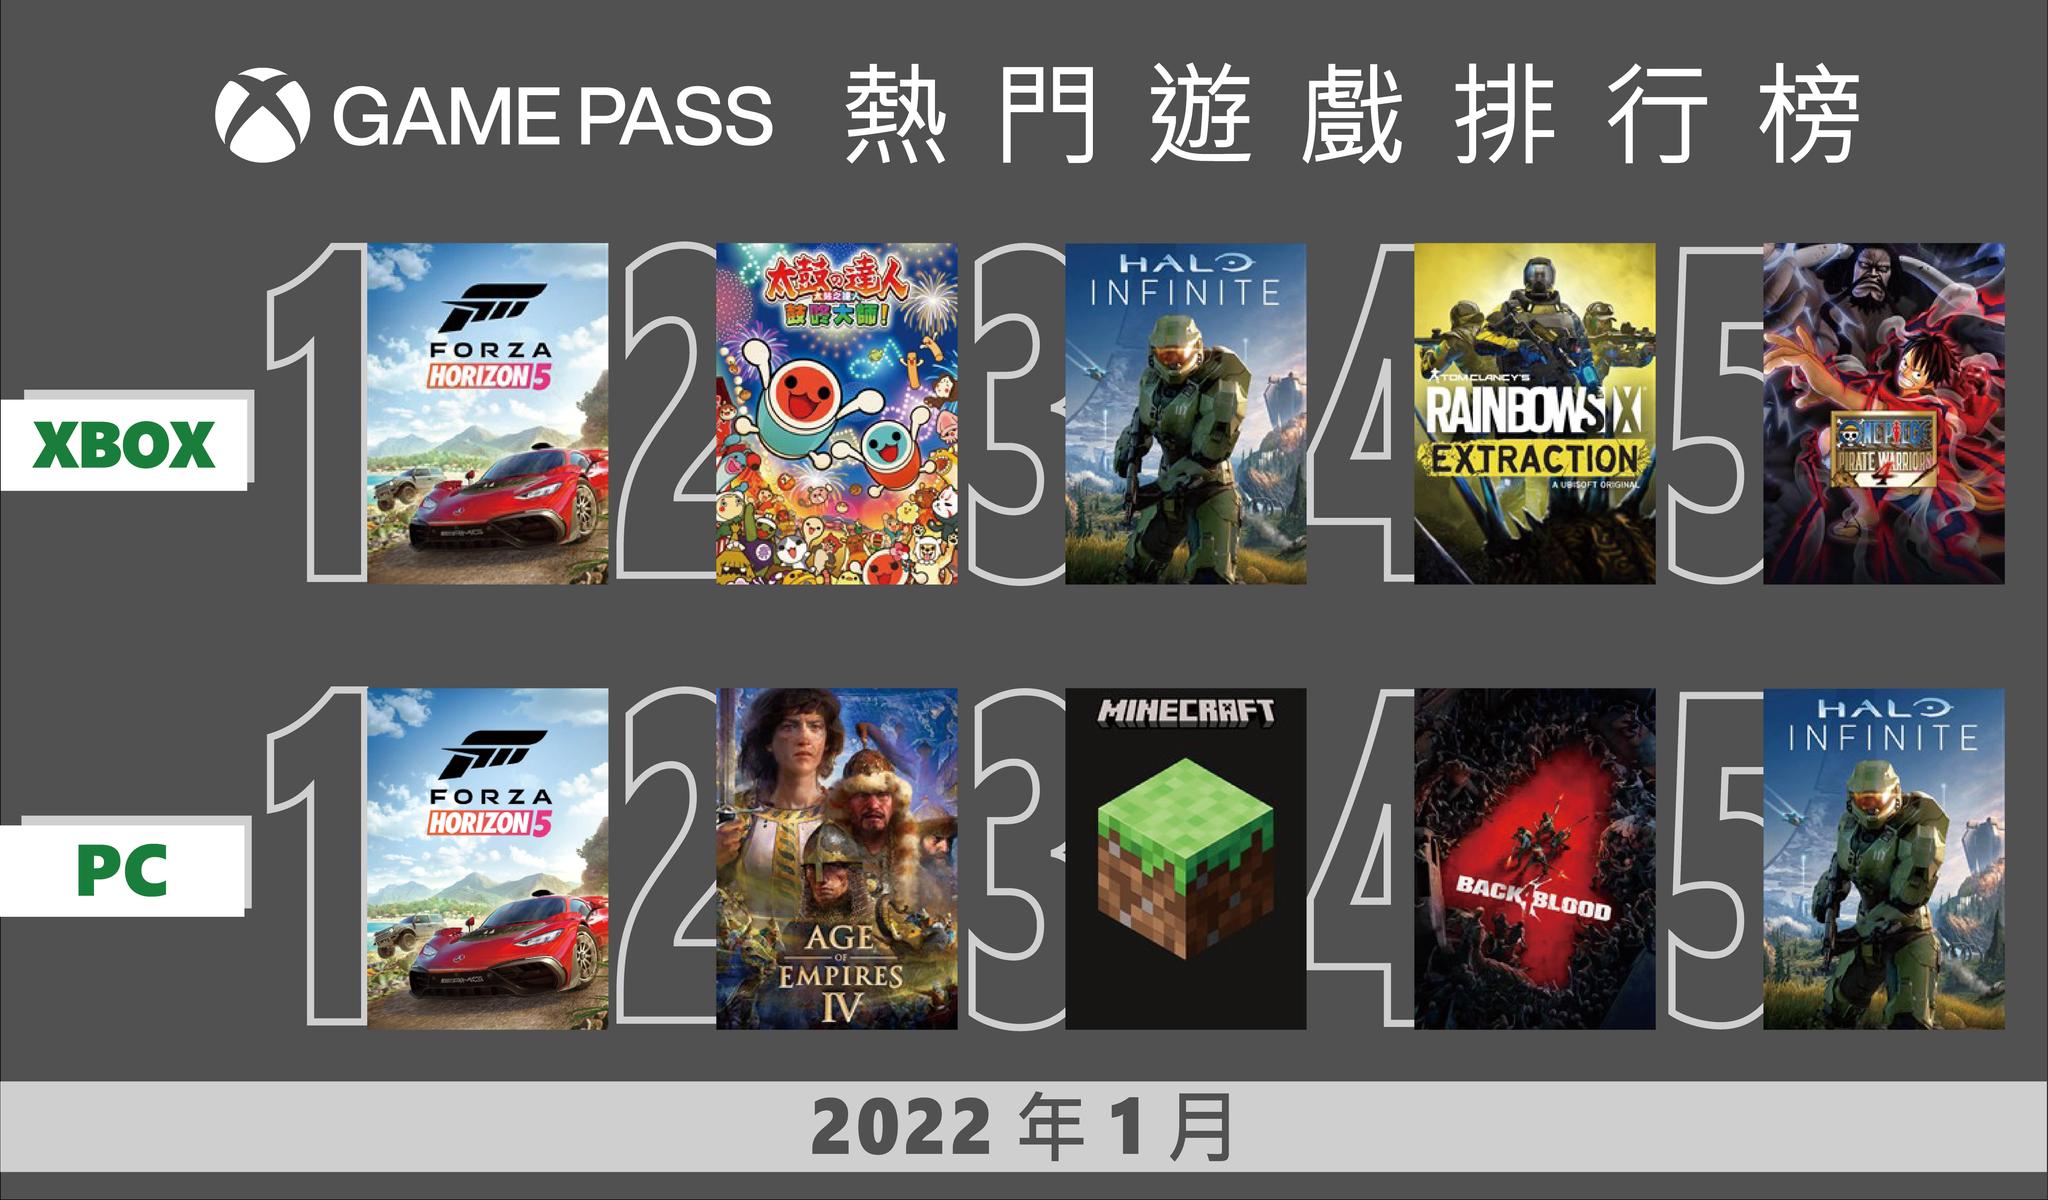 Xbox-Game-Pass-1月台灣熱門遊戲排行榜顯示出玩家多元遊戲偏好及陣容豐富性